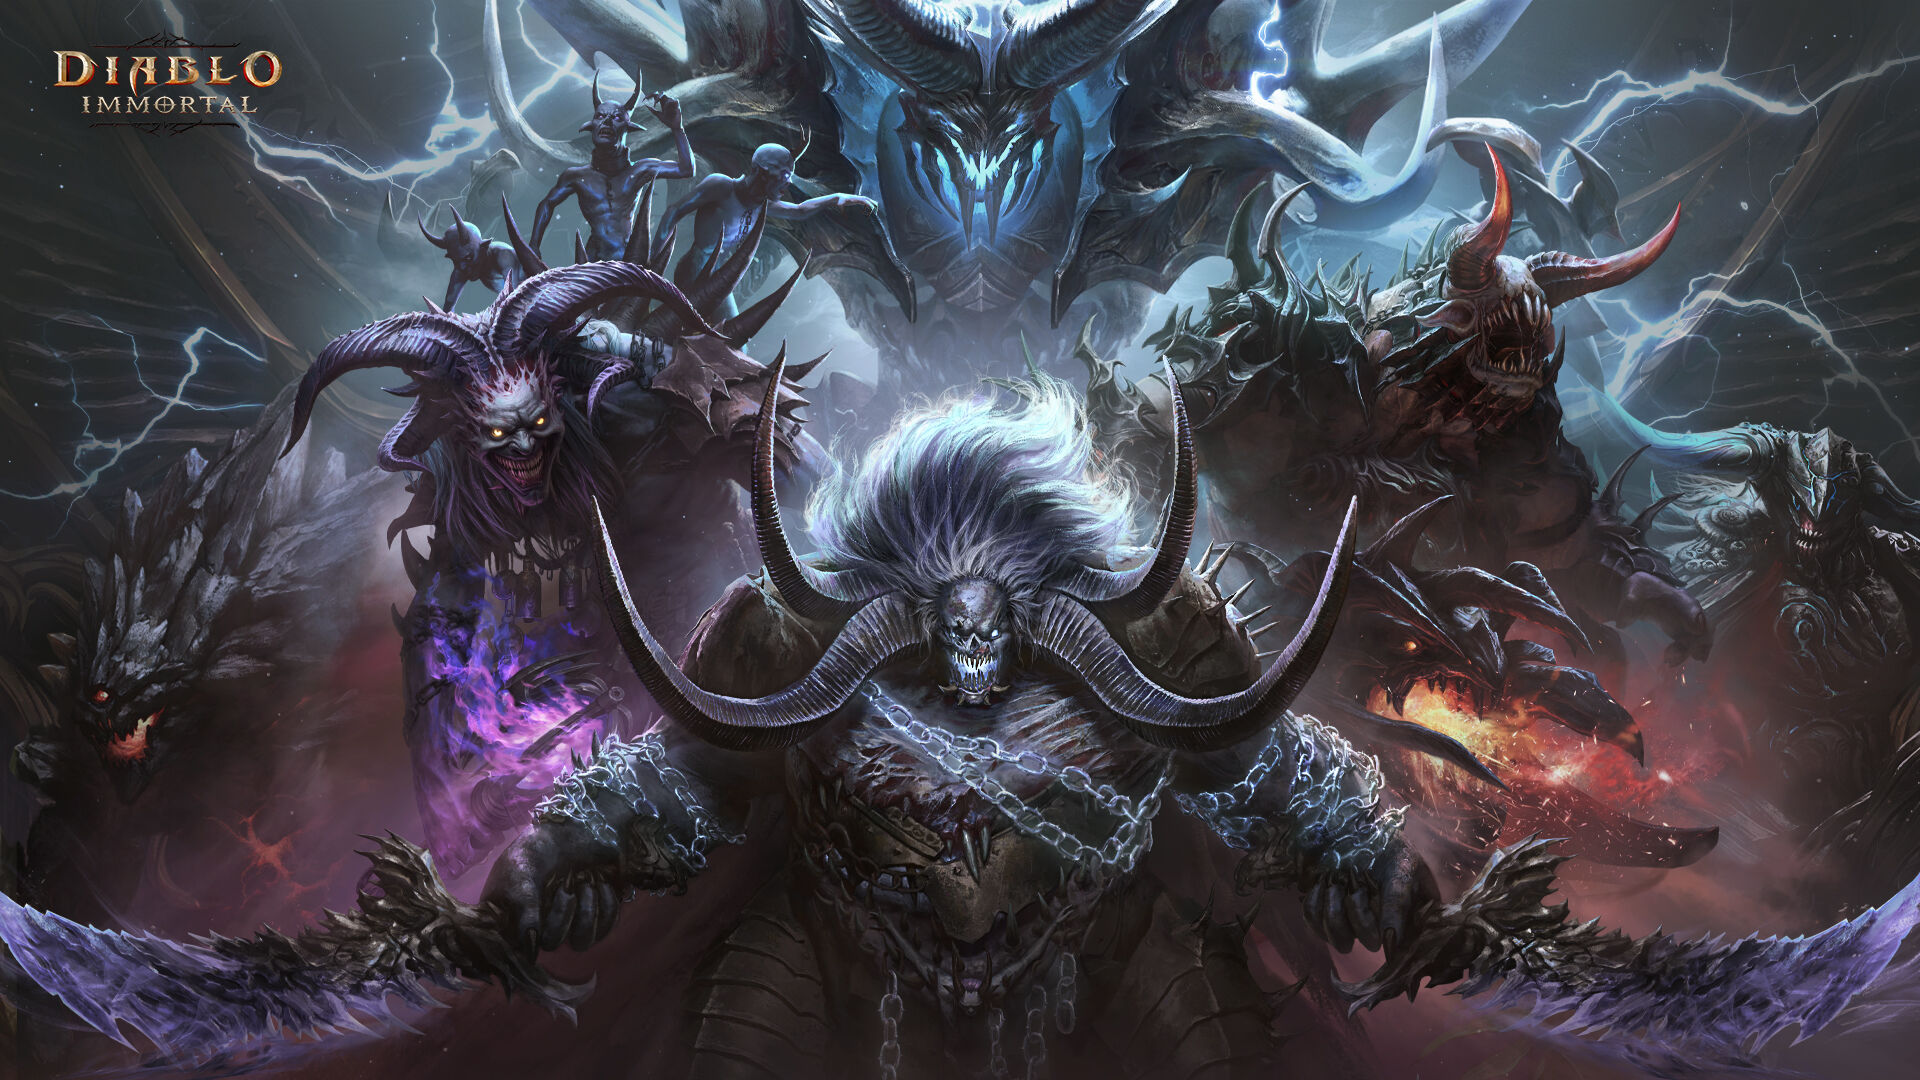 Alfa Técnico de Diablo Immortal — Mais perto do Inferno — Diablo Immortal —  Notícias da Blizzard